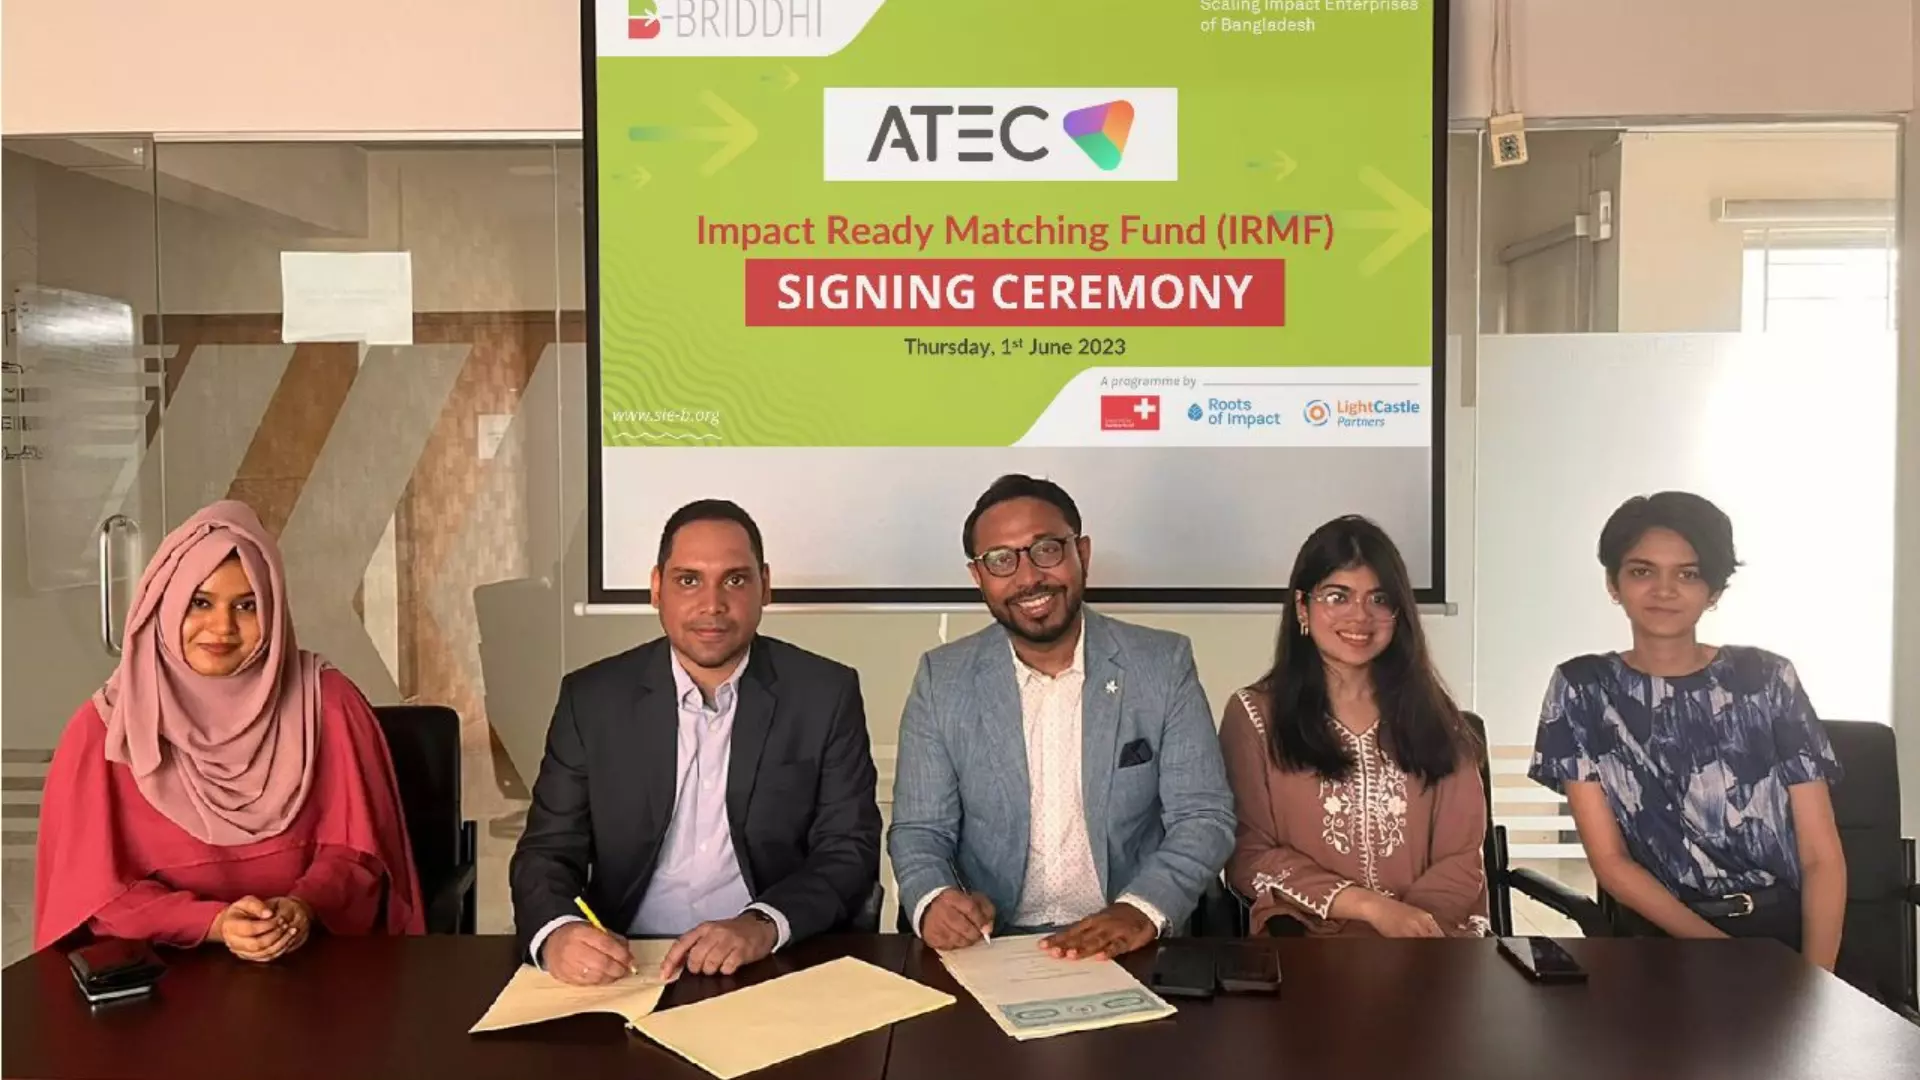 Biniyog Briddhi Partners with ATEC